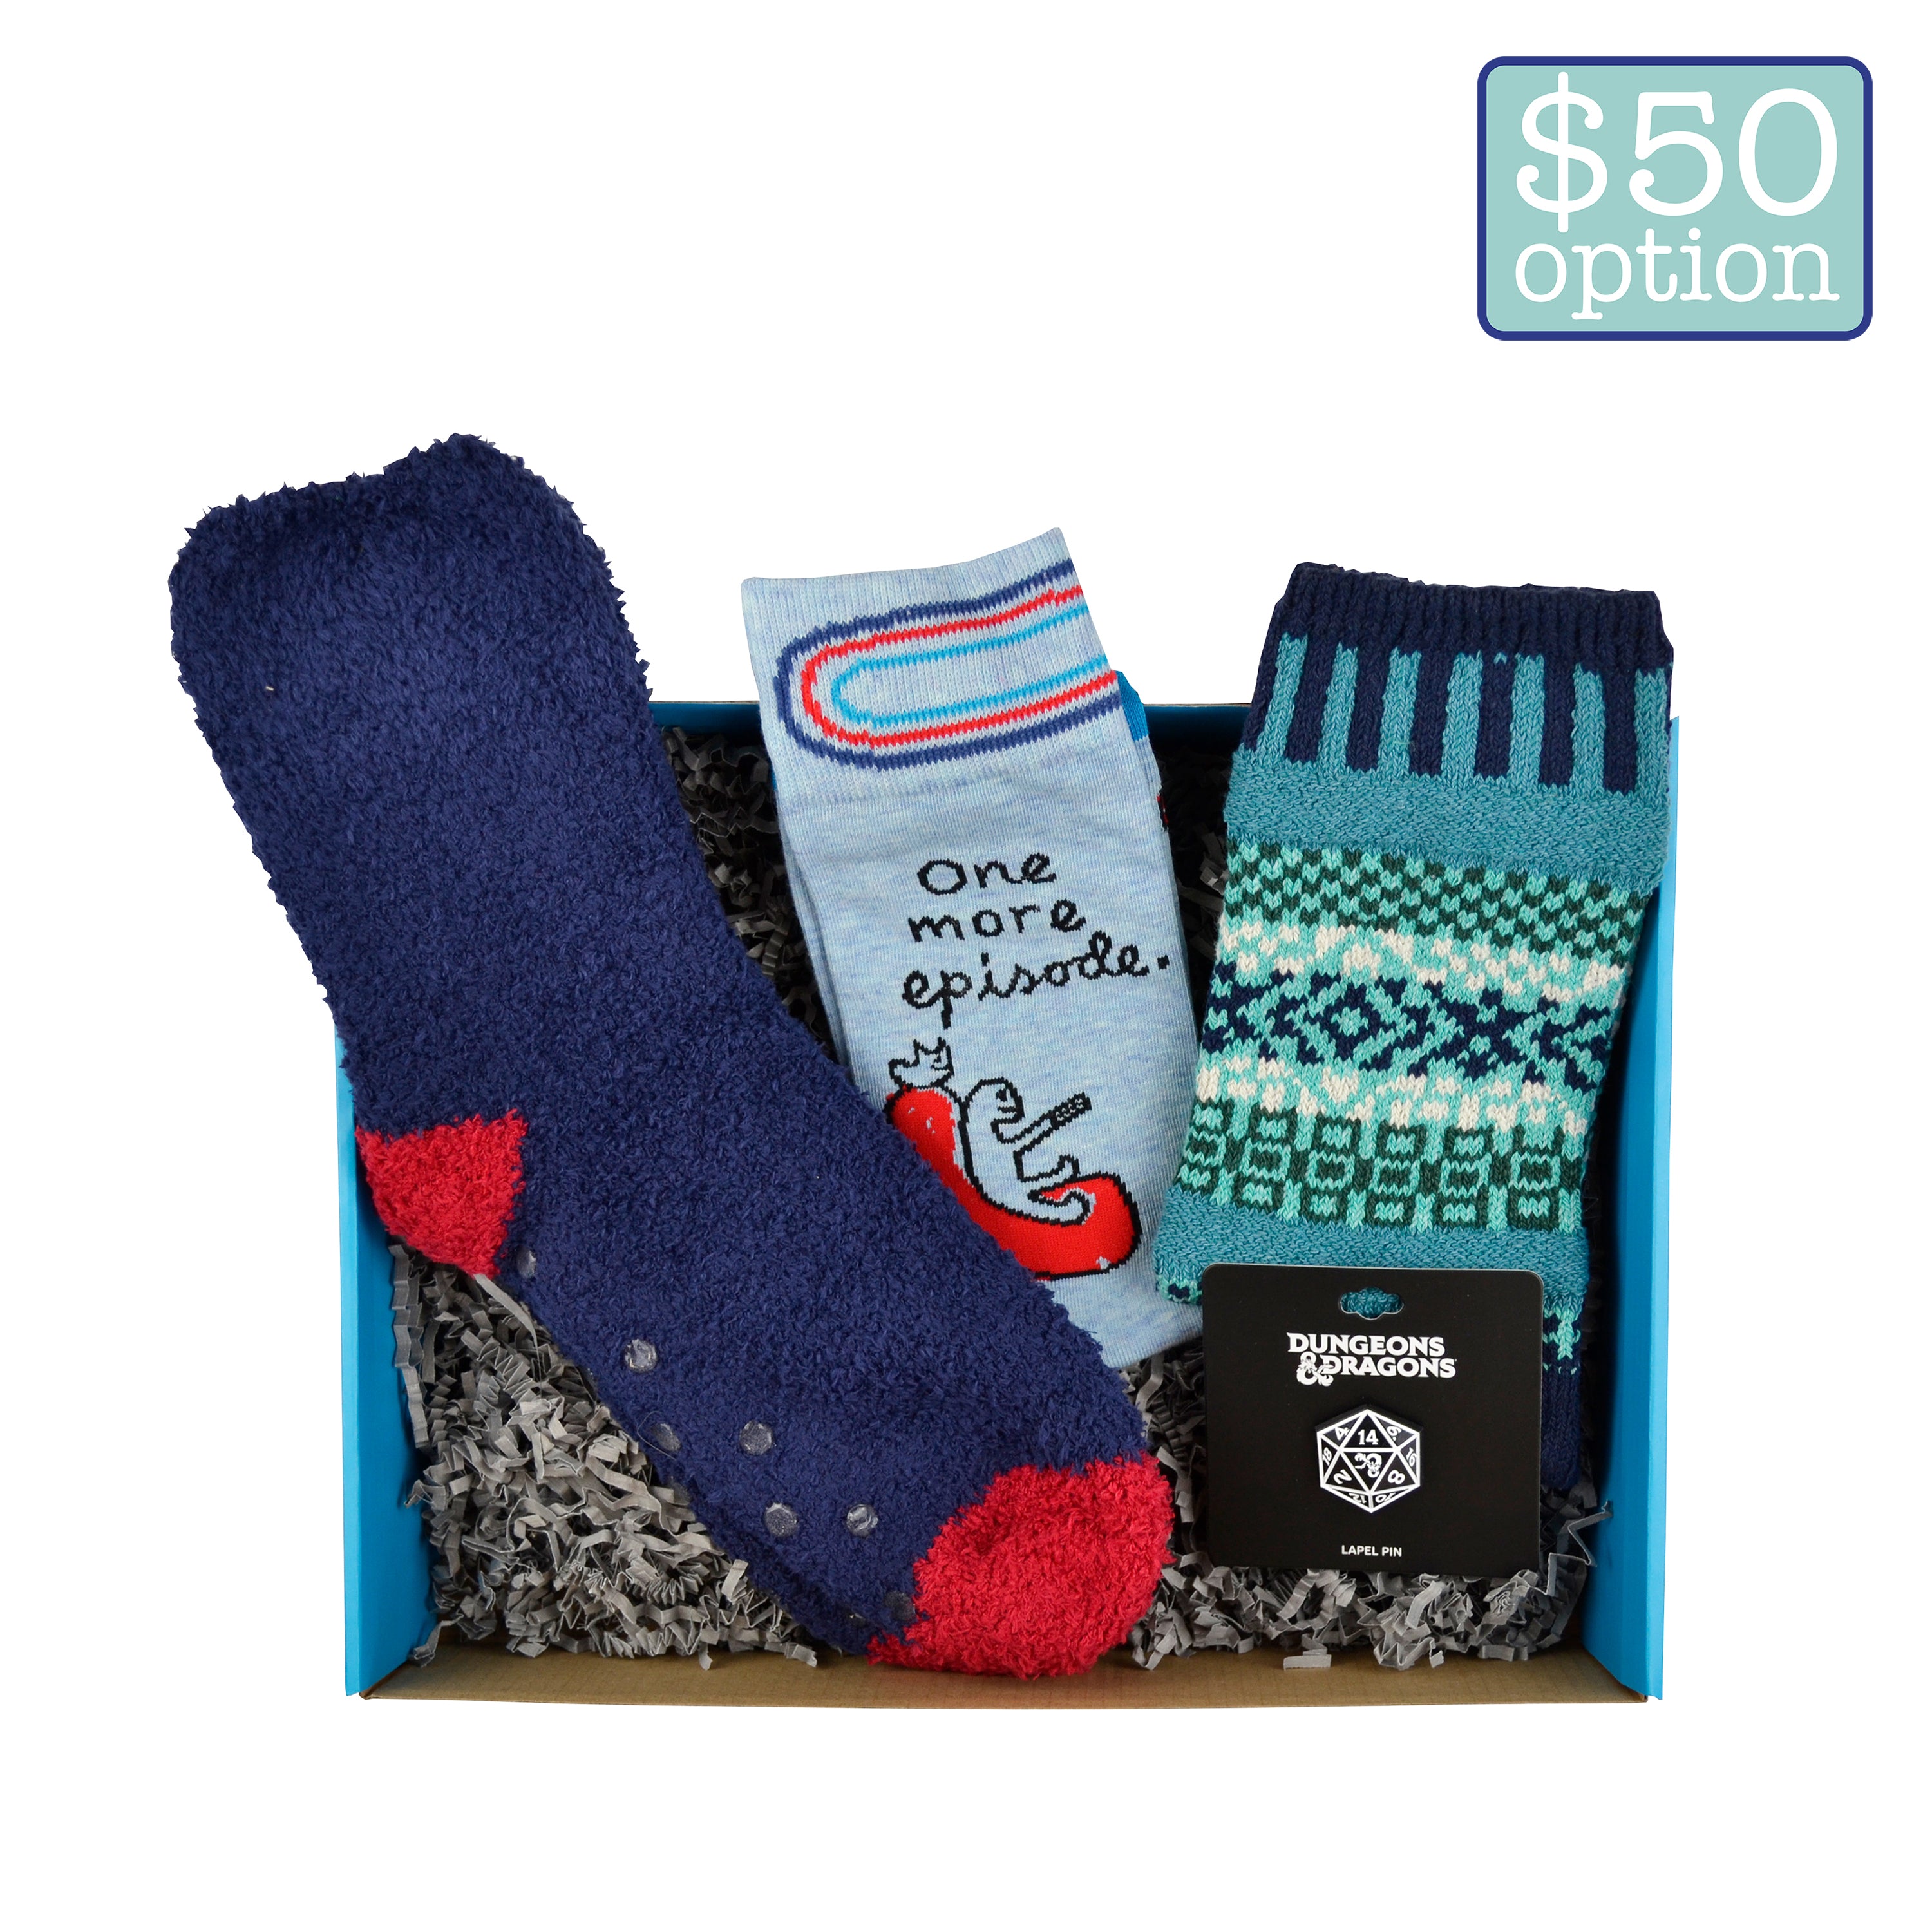 An array of cozy, fuzzy, indoorsy socks